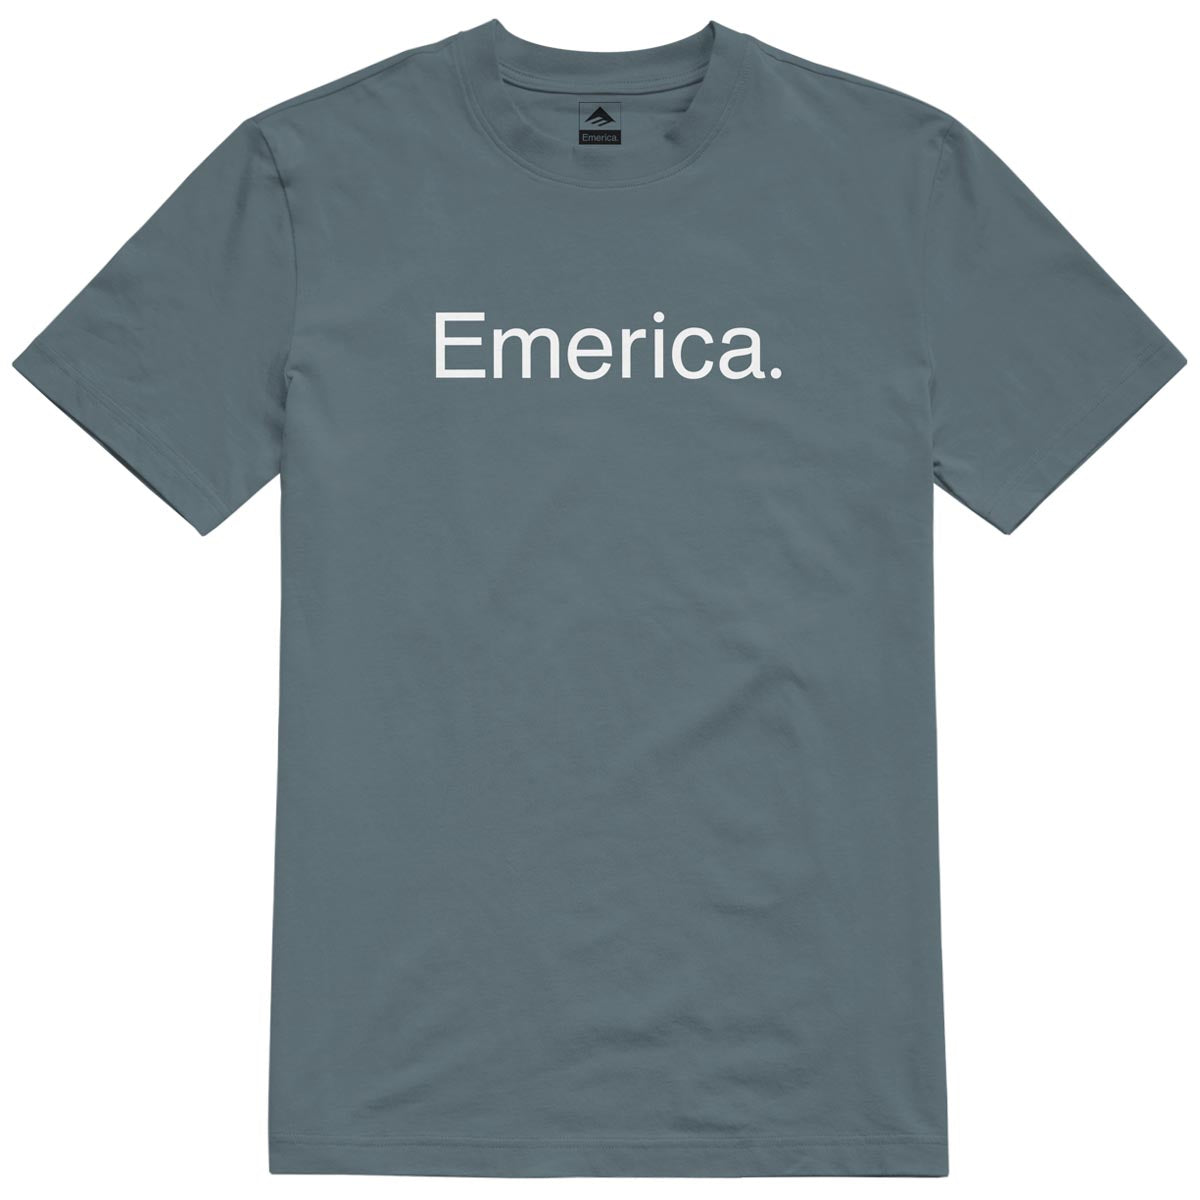 Emerica Pure T-Shirt - Dusty Blue image 1